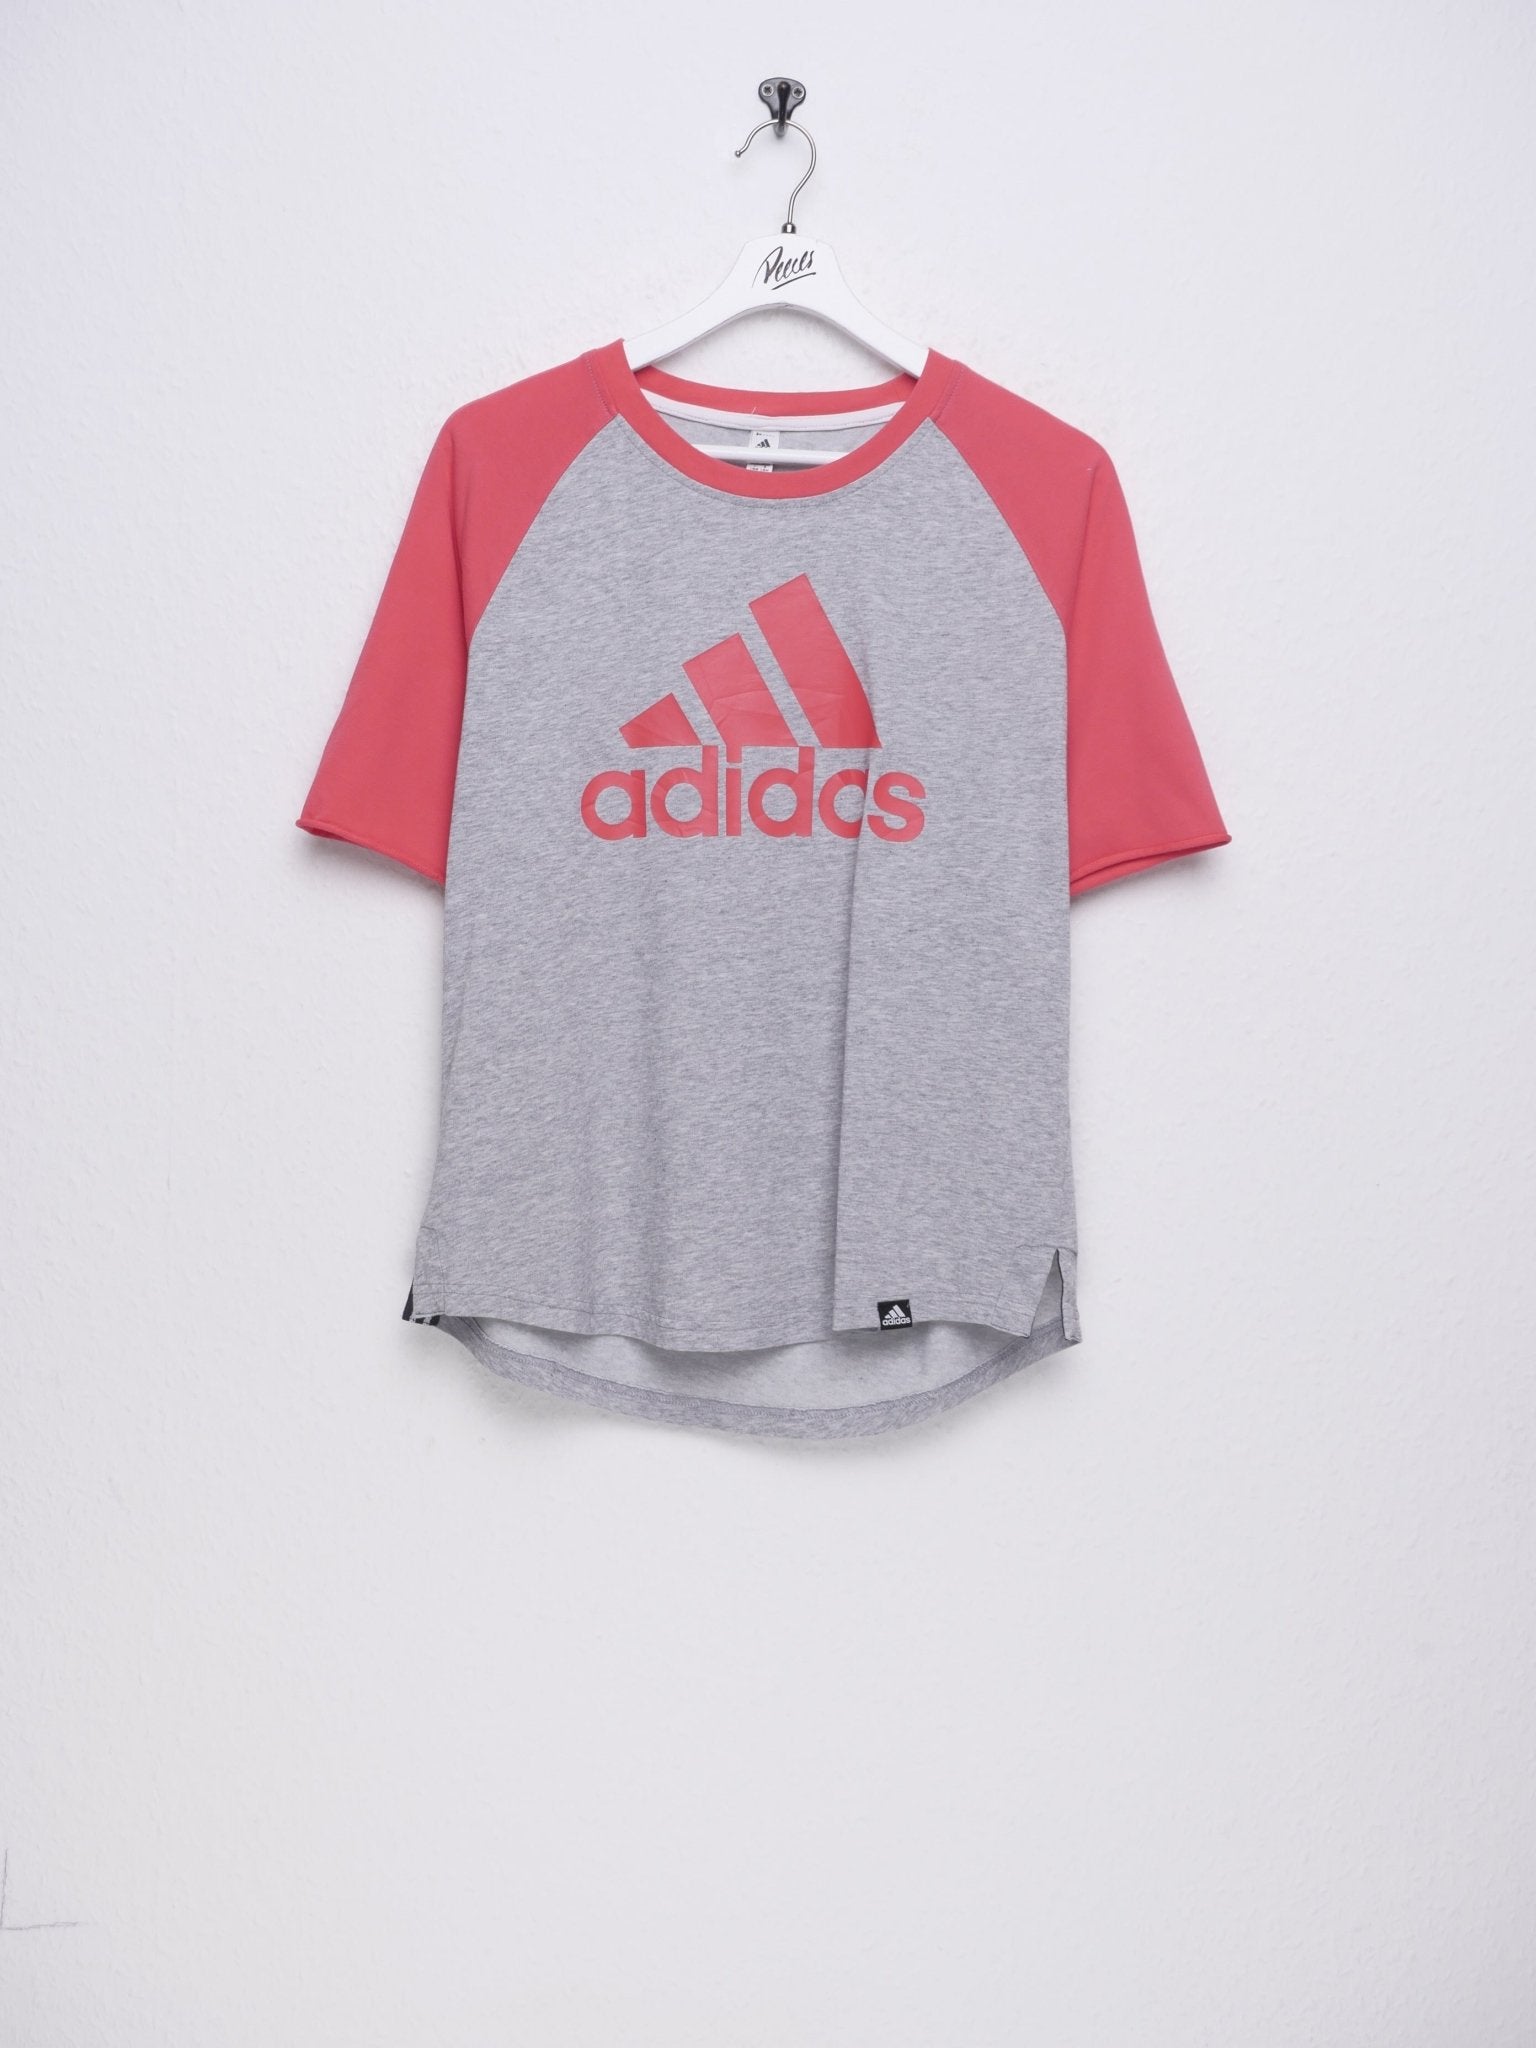 Adidas printed Logo two toned Shirt - Peeces